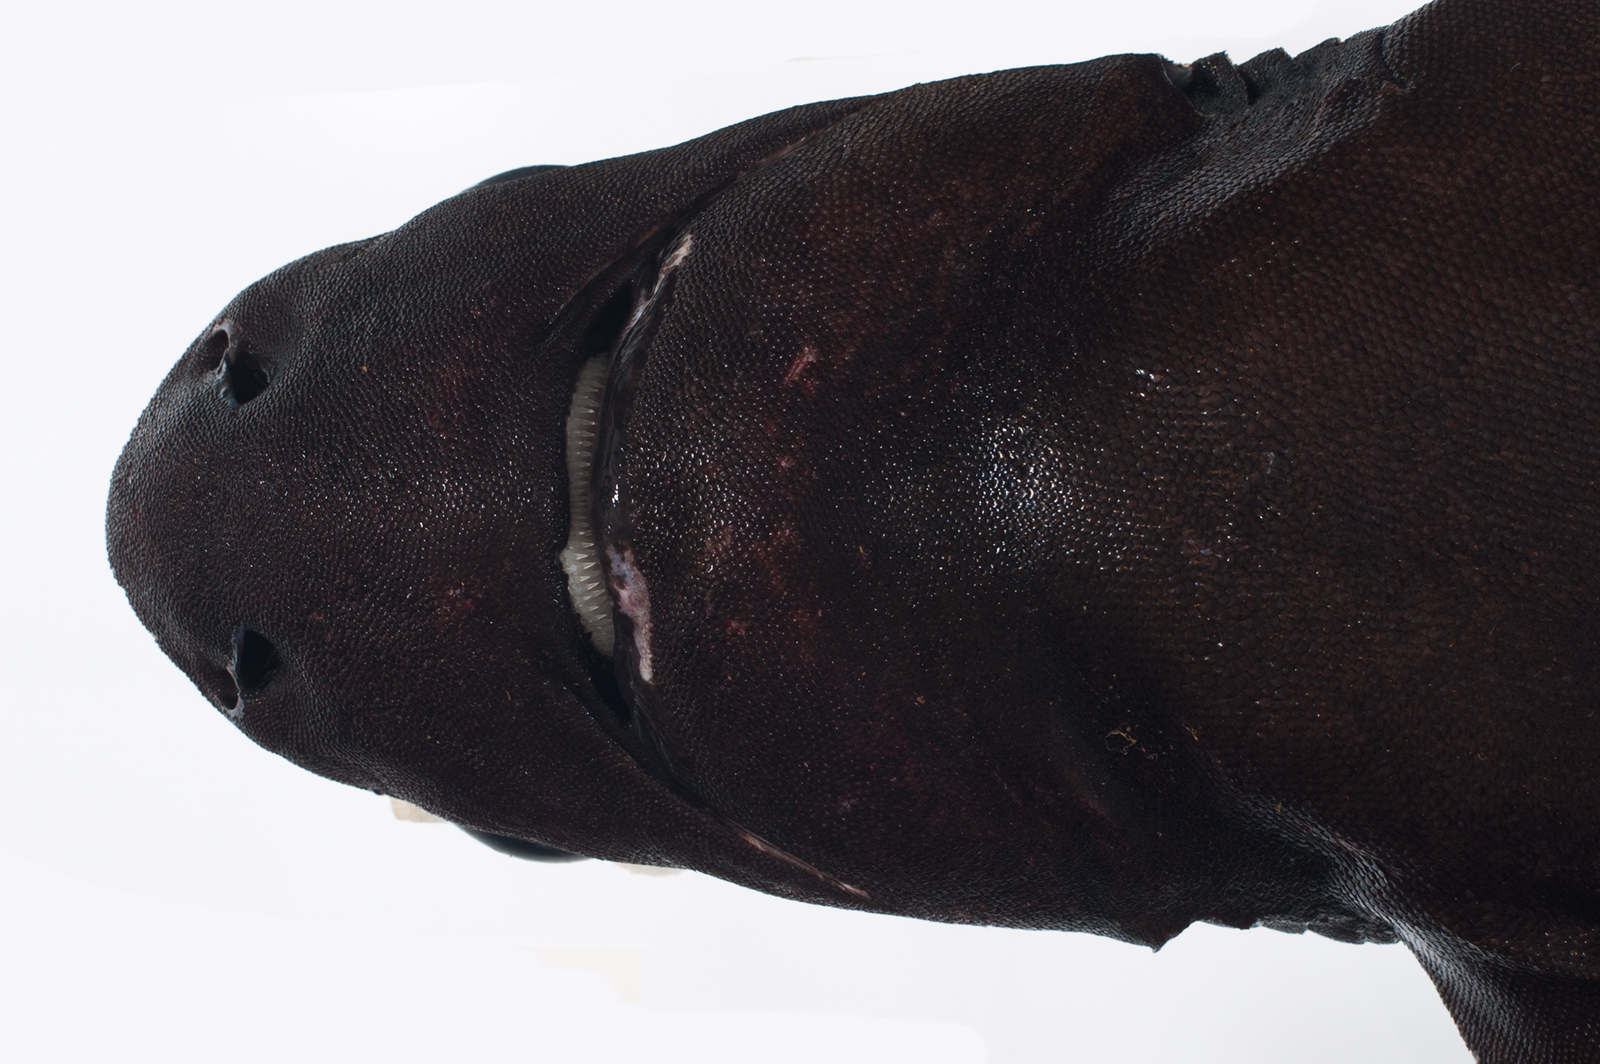 Centroscymnus Coelolepis